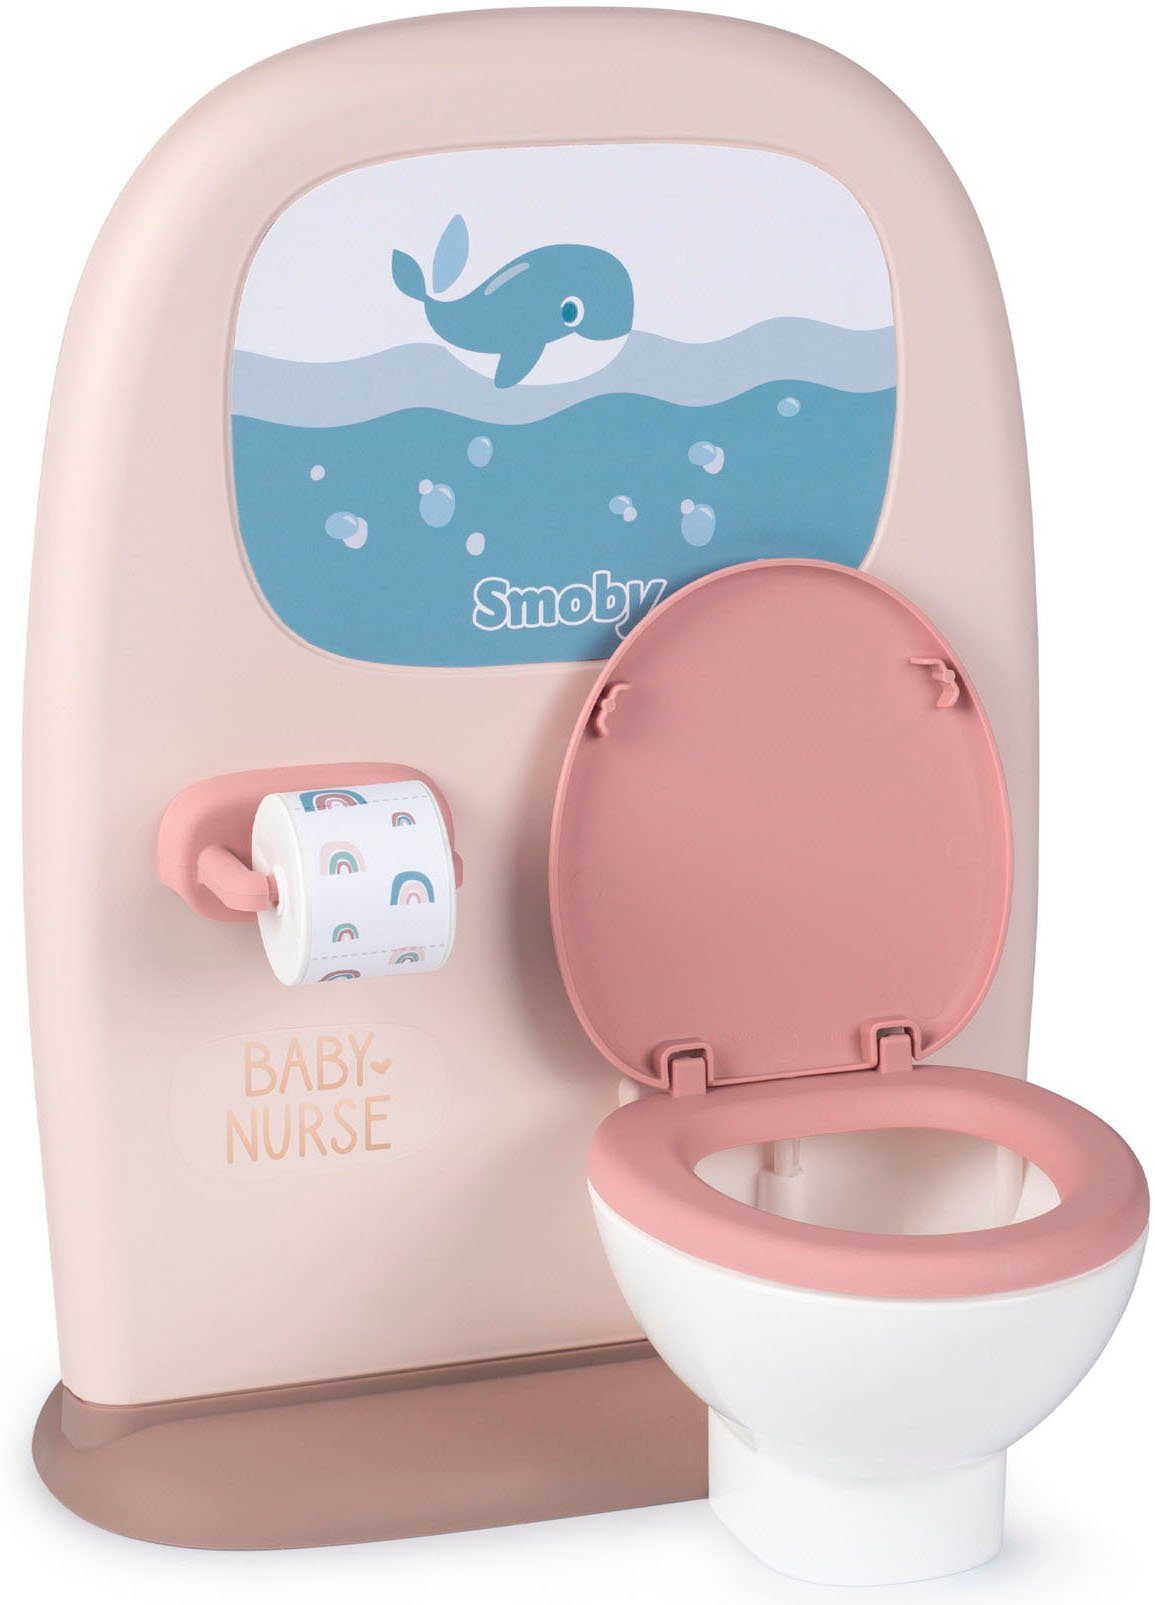 Smoby Puppen Pflegecenter Baby Nurse, Puppen-Badezimmer, Made in Europe